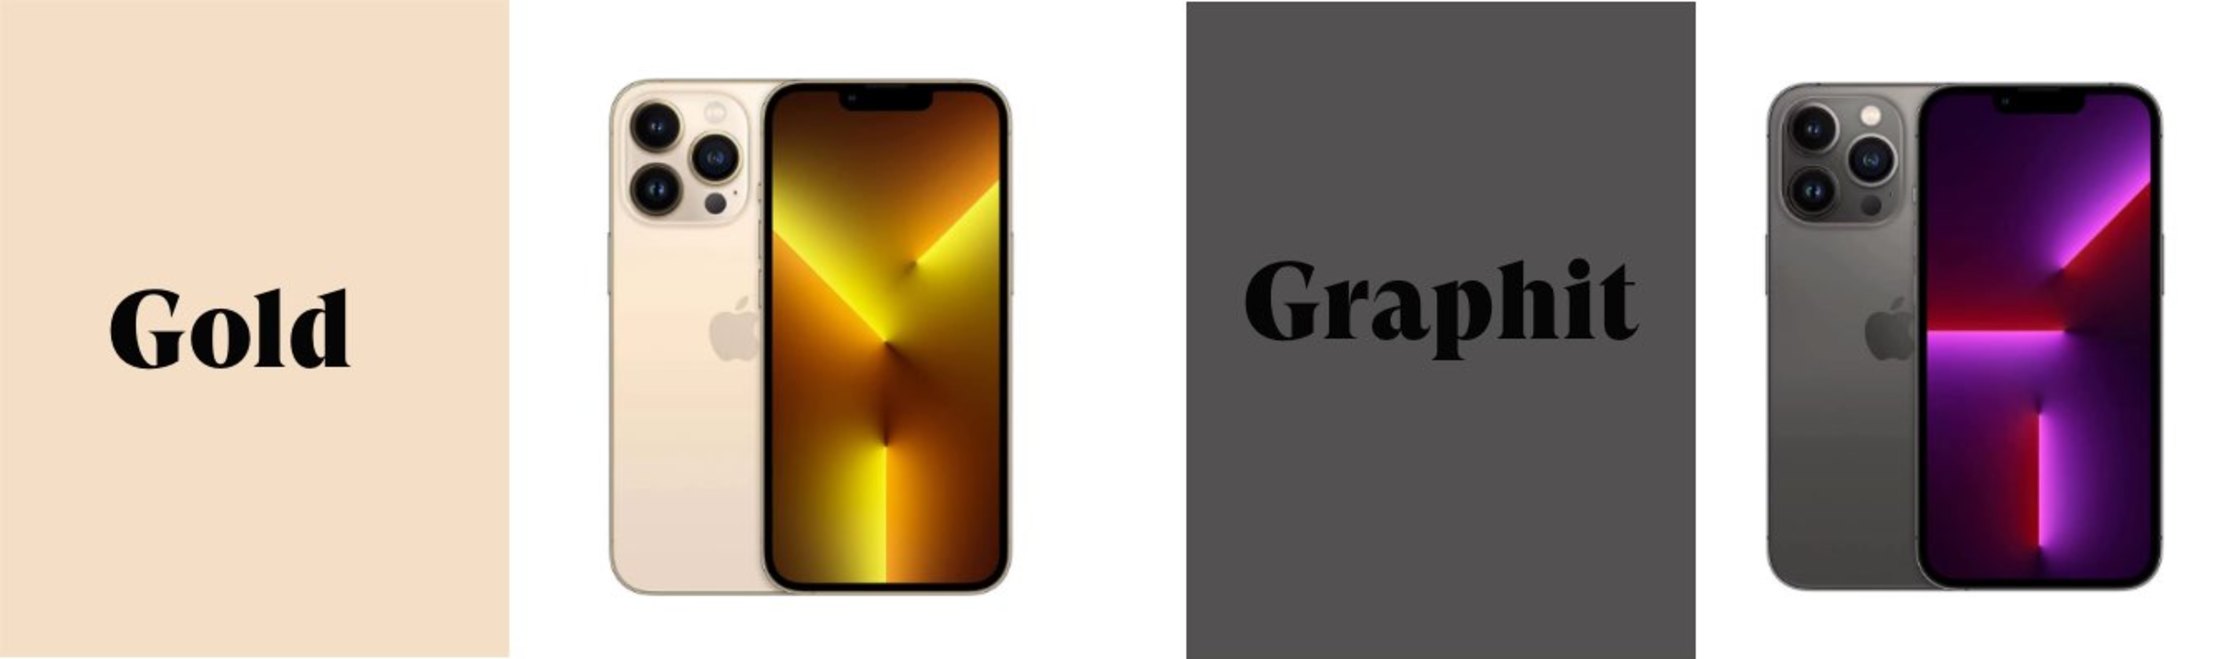 iphone 13 farben gold-graphite